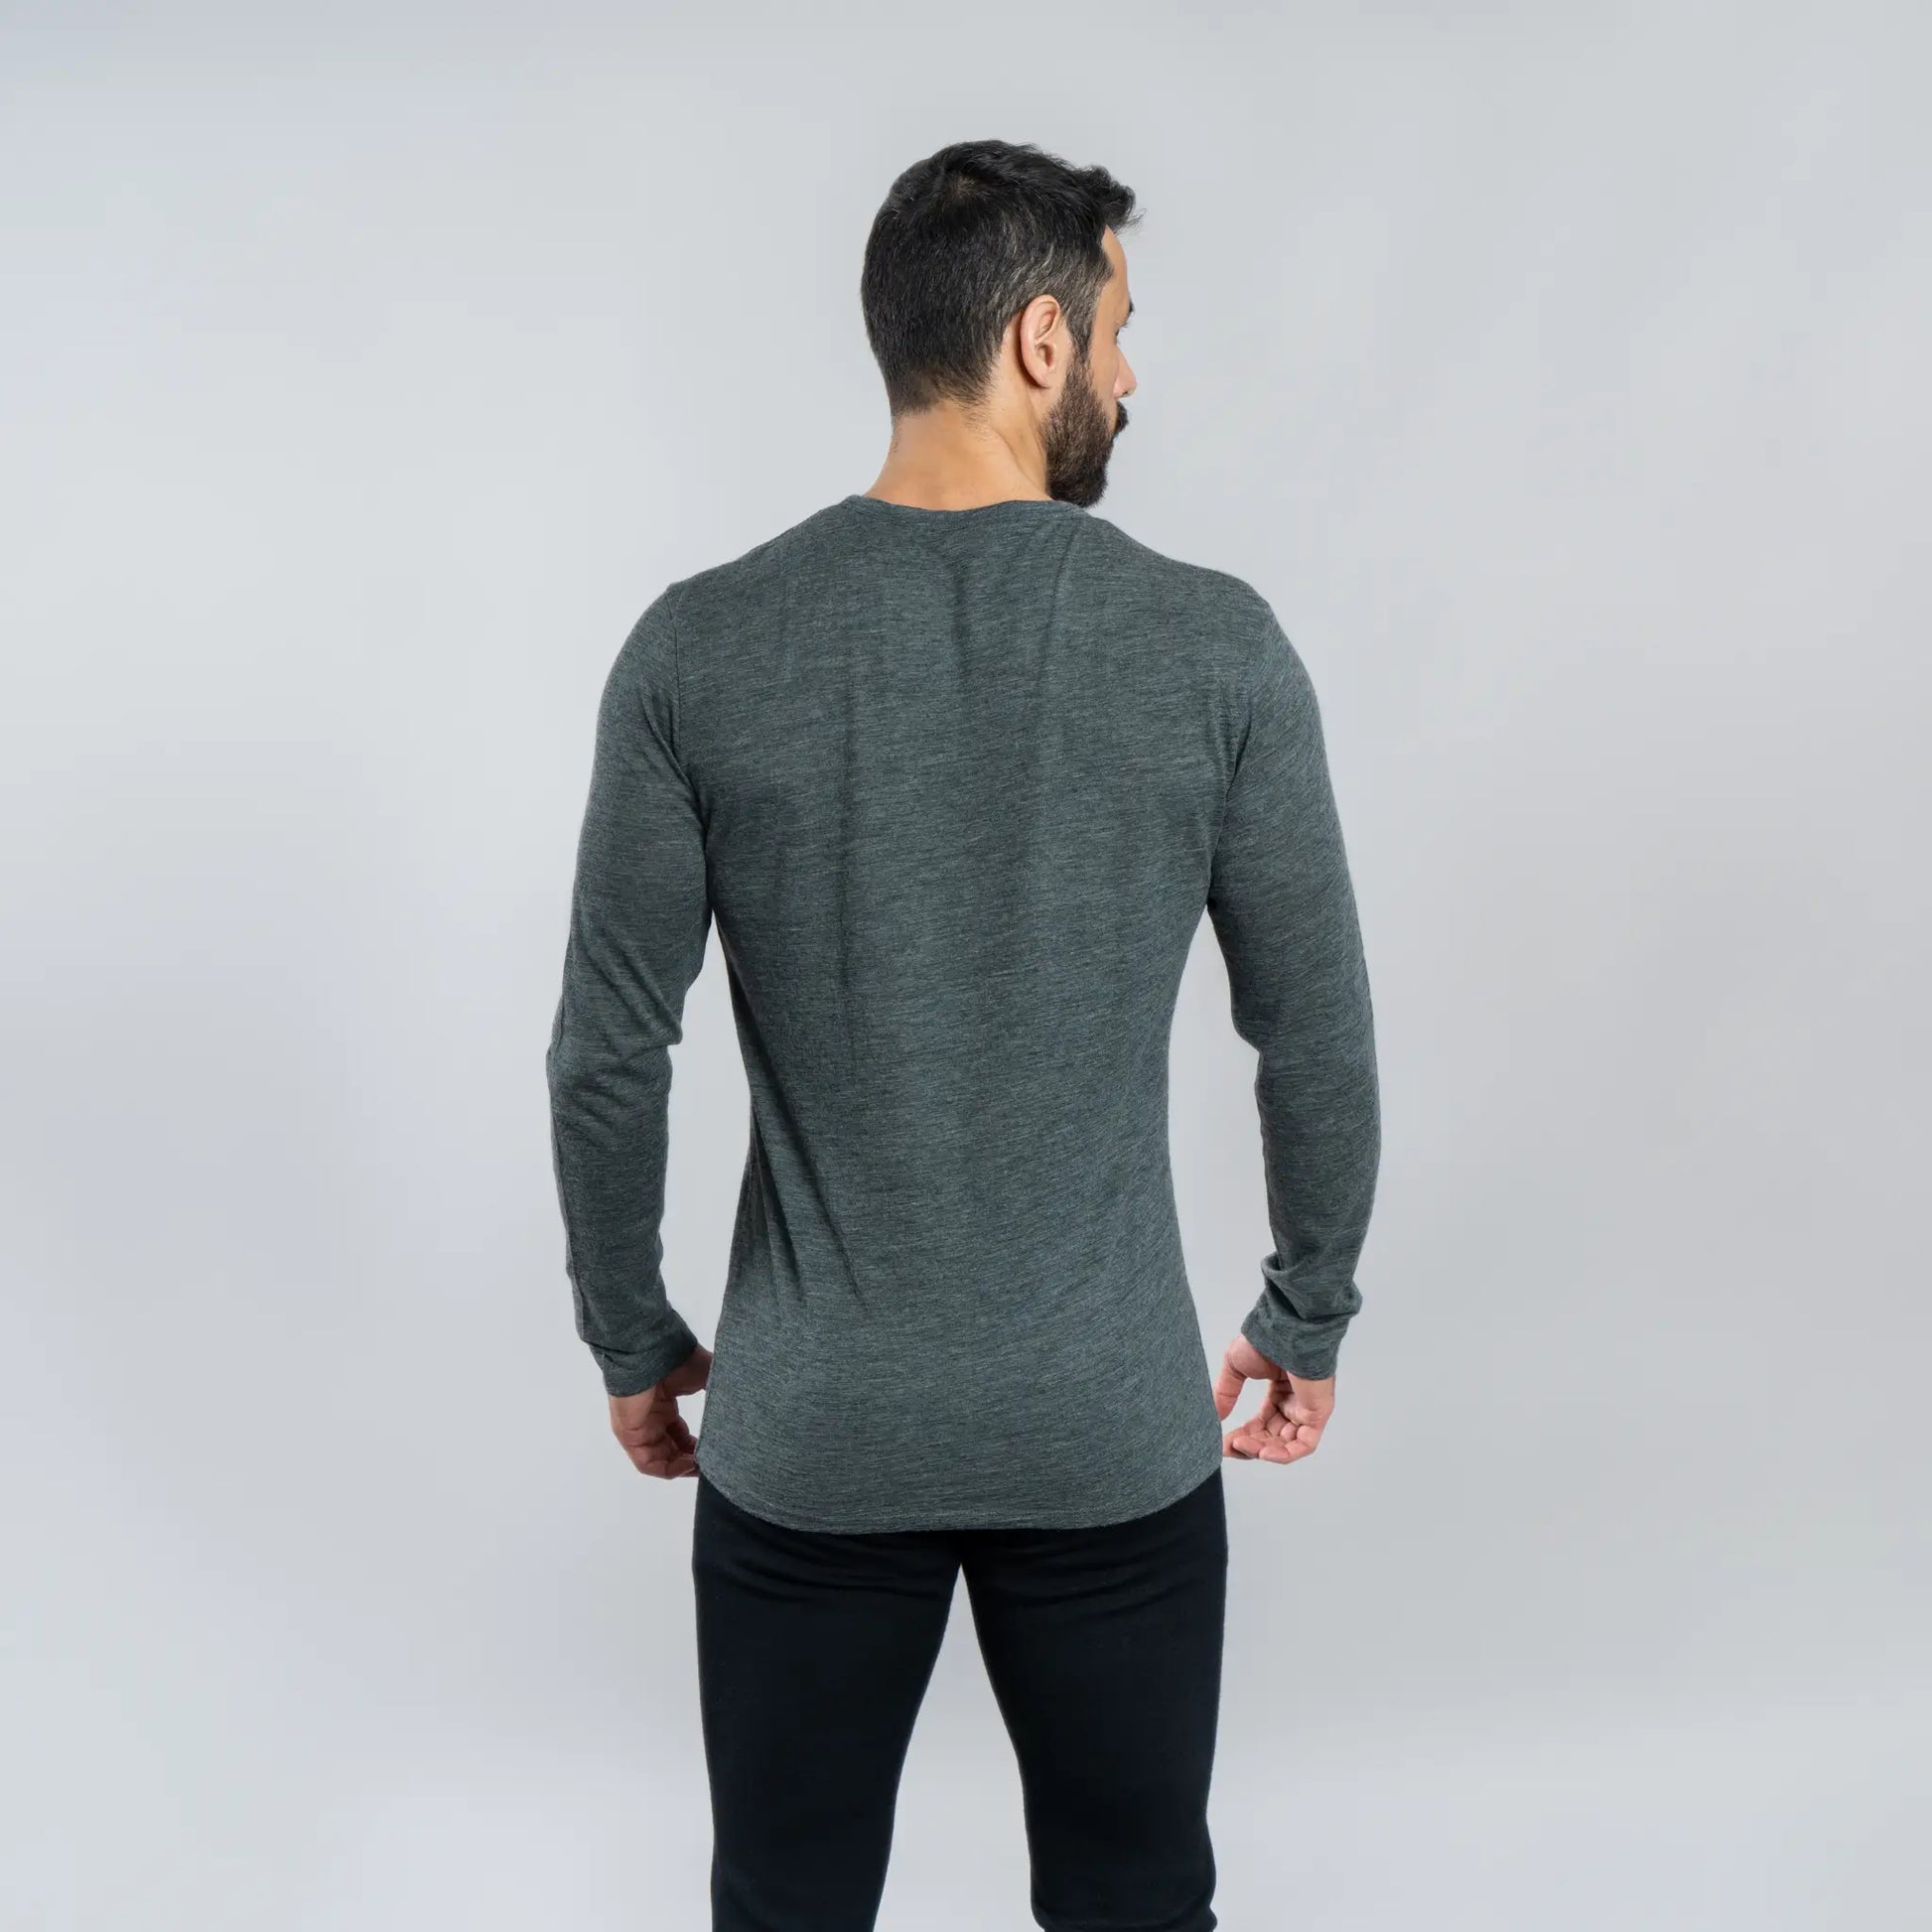 Men's Alpaca Wool Long Sleeve Base Layer: 160 Ultralight color gray